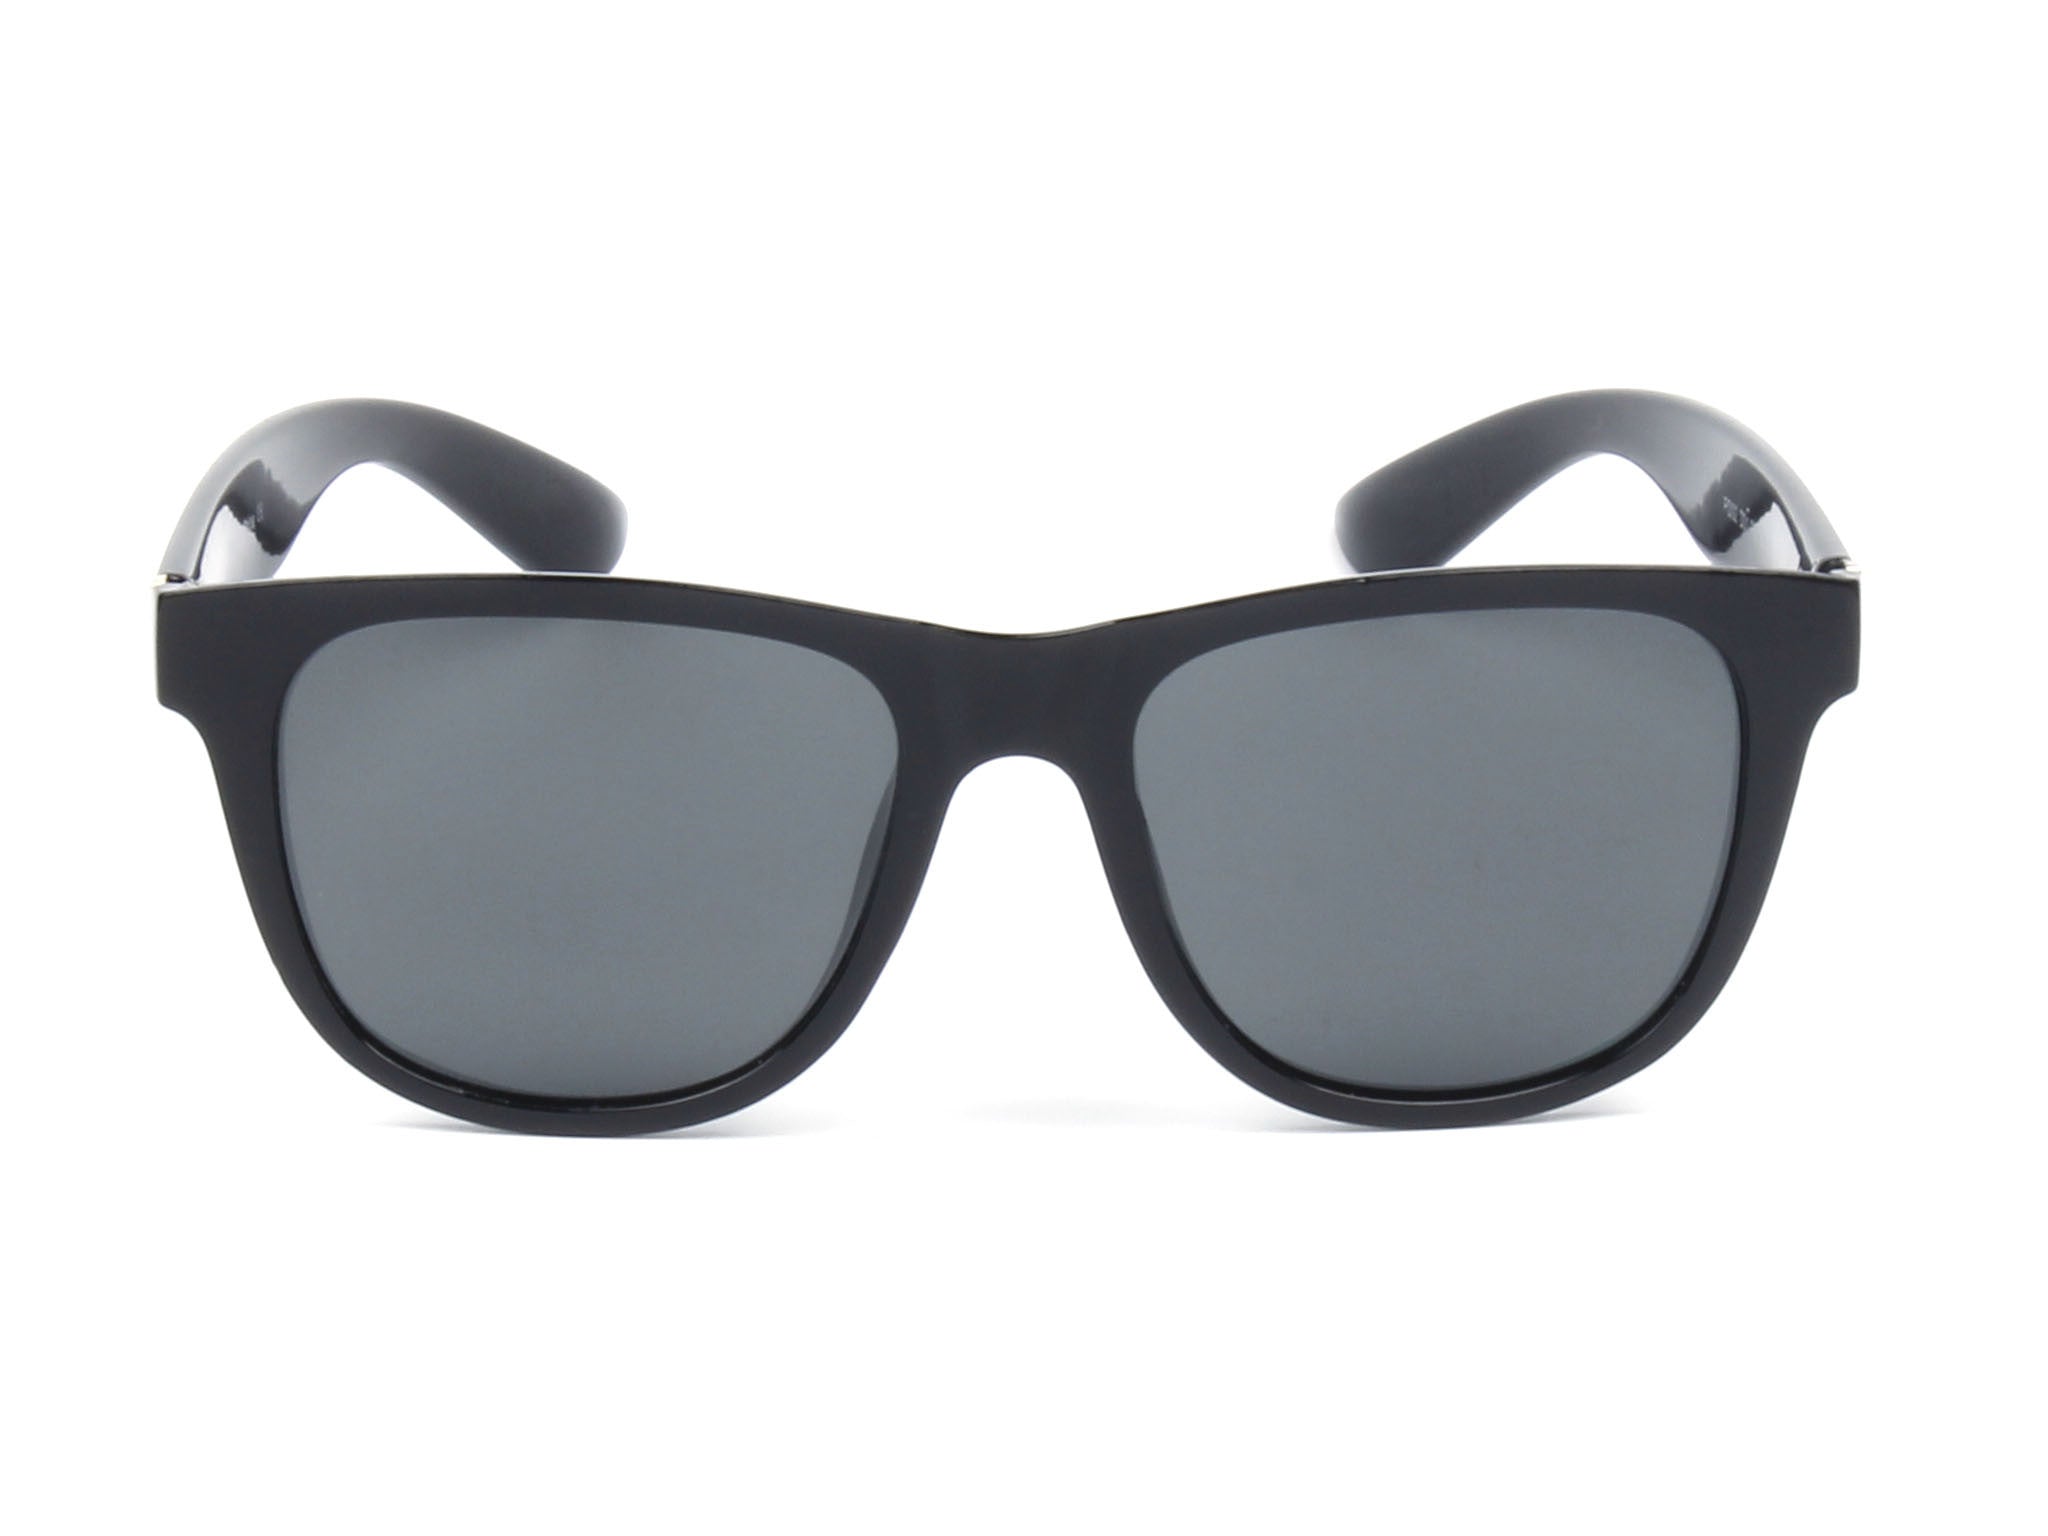 PD02 - Classic Square Retro Polarized Sunglasses Assorted/Mixed